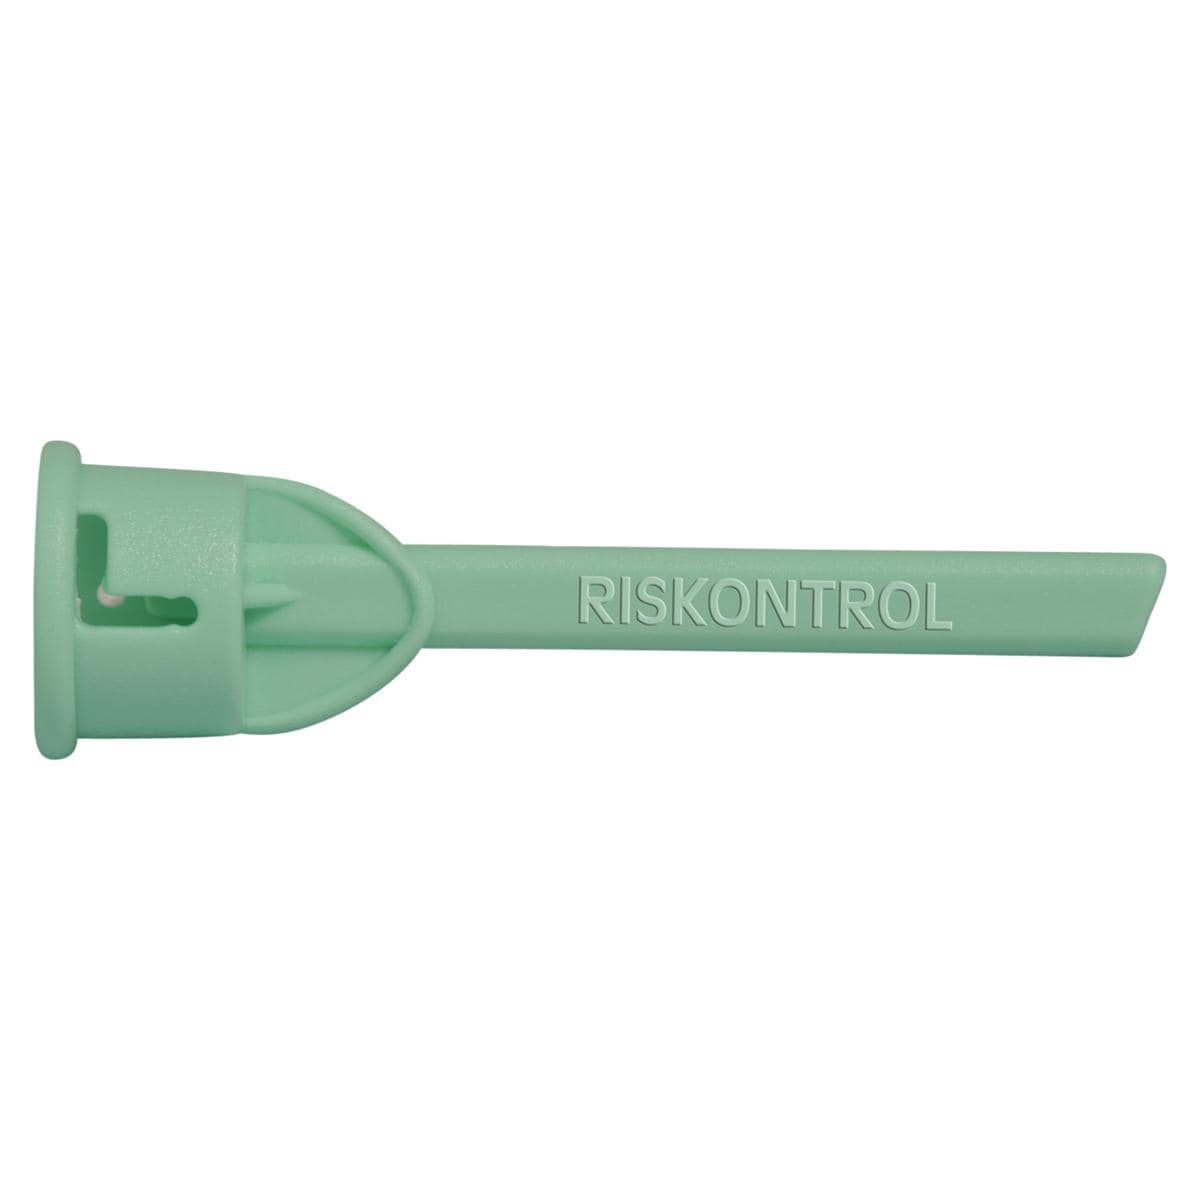 Riskontrol® Classic Einwegansätze - Grün, Packung 250 Stück